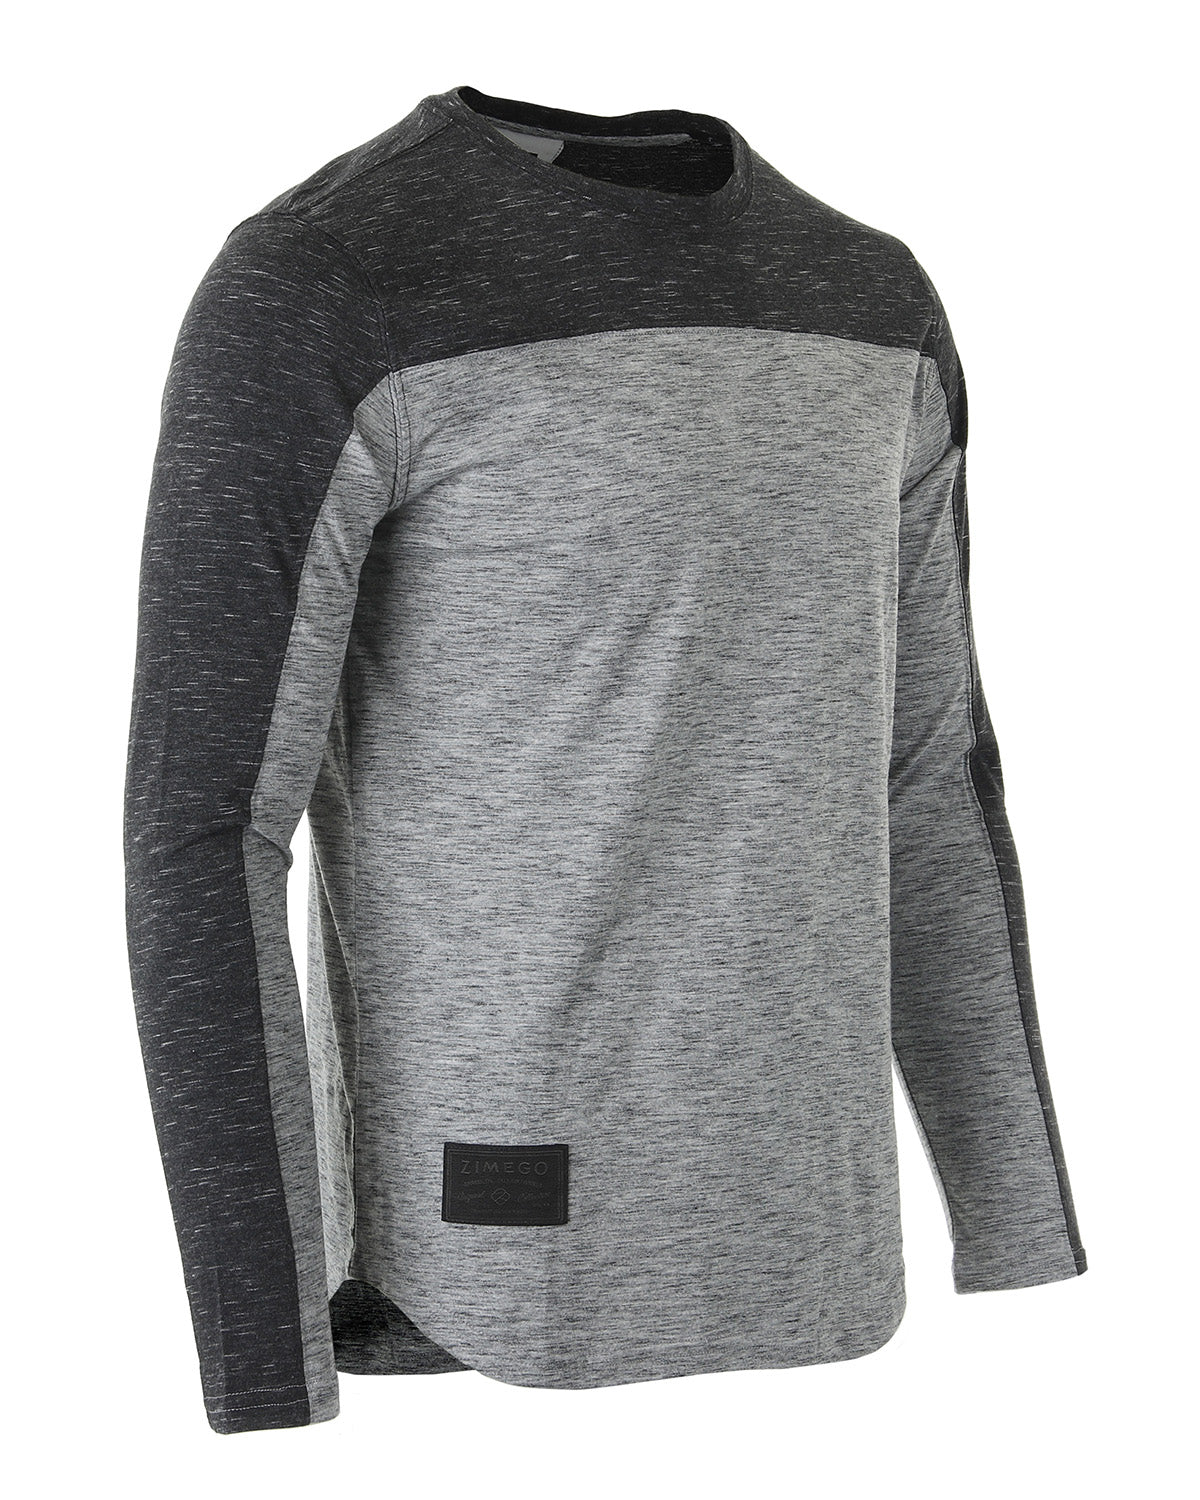 Men's Fashion Color Block Long Sleeve Curved Hemline Athletic Hiphop Shirt